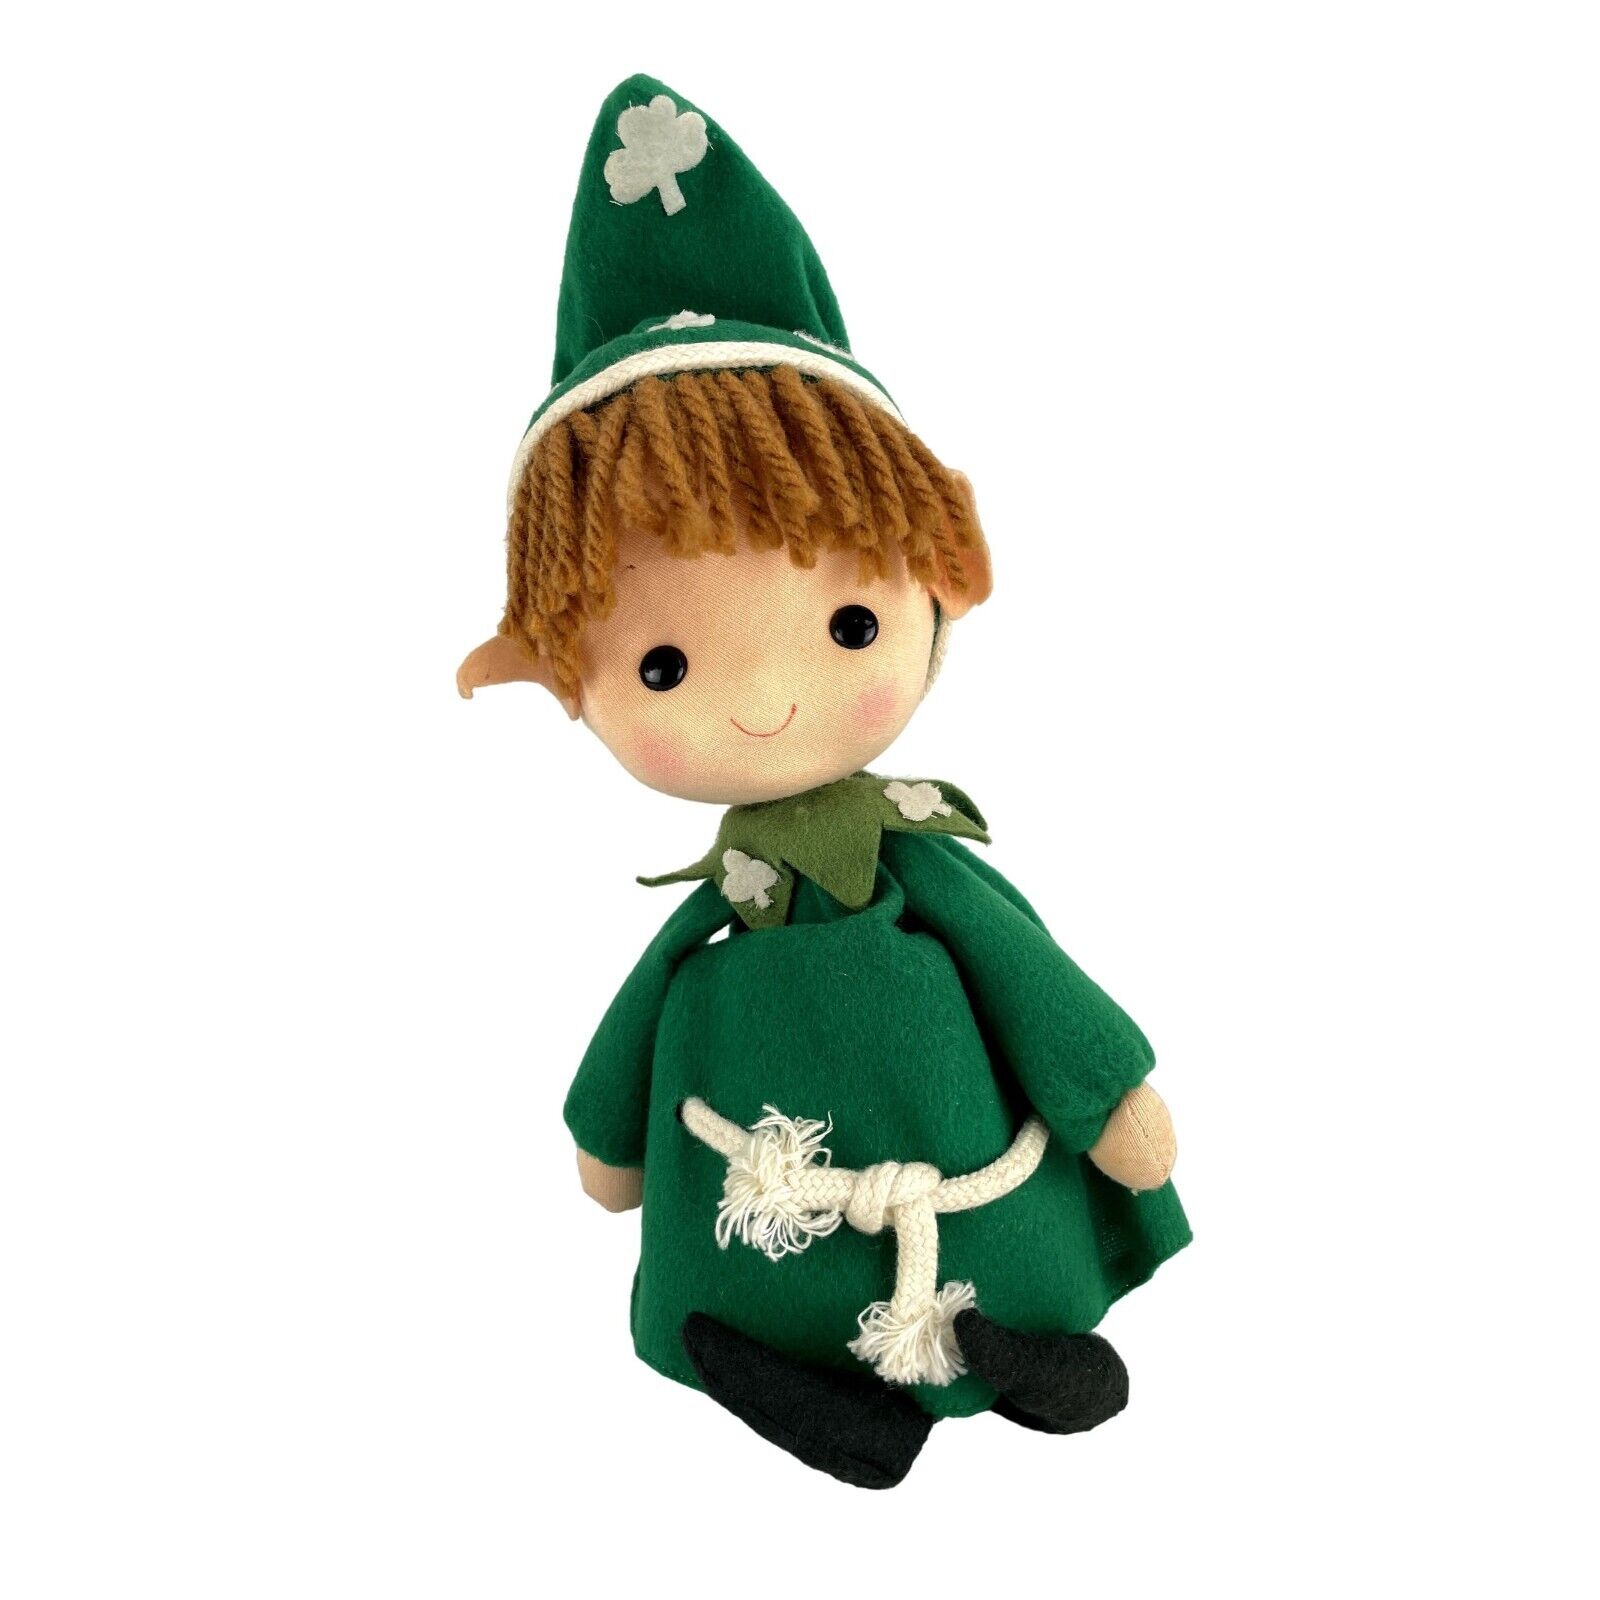 Schmid Leprechaun Doll Animated St. Patrick's Plays WHEN IRISH EYES ARE SMILING